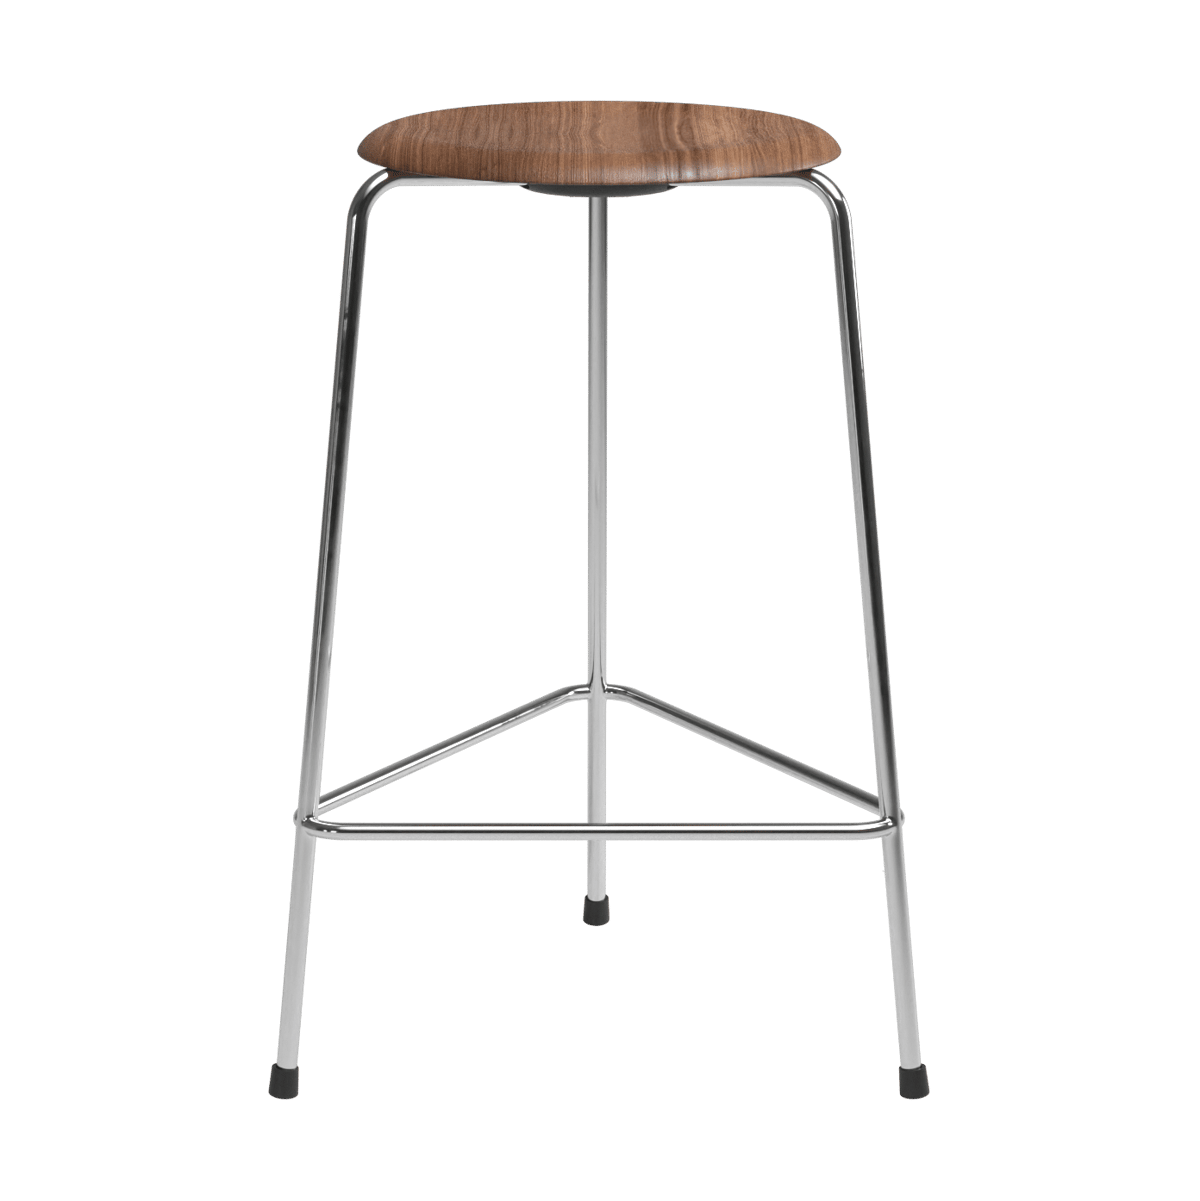 Fritz Hansen High Dot counter stool 3 poten Walnoot-chroom